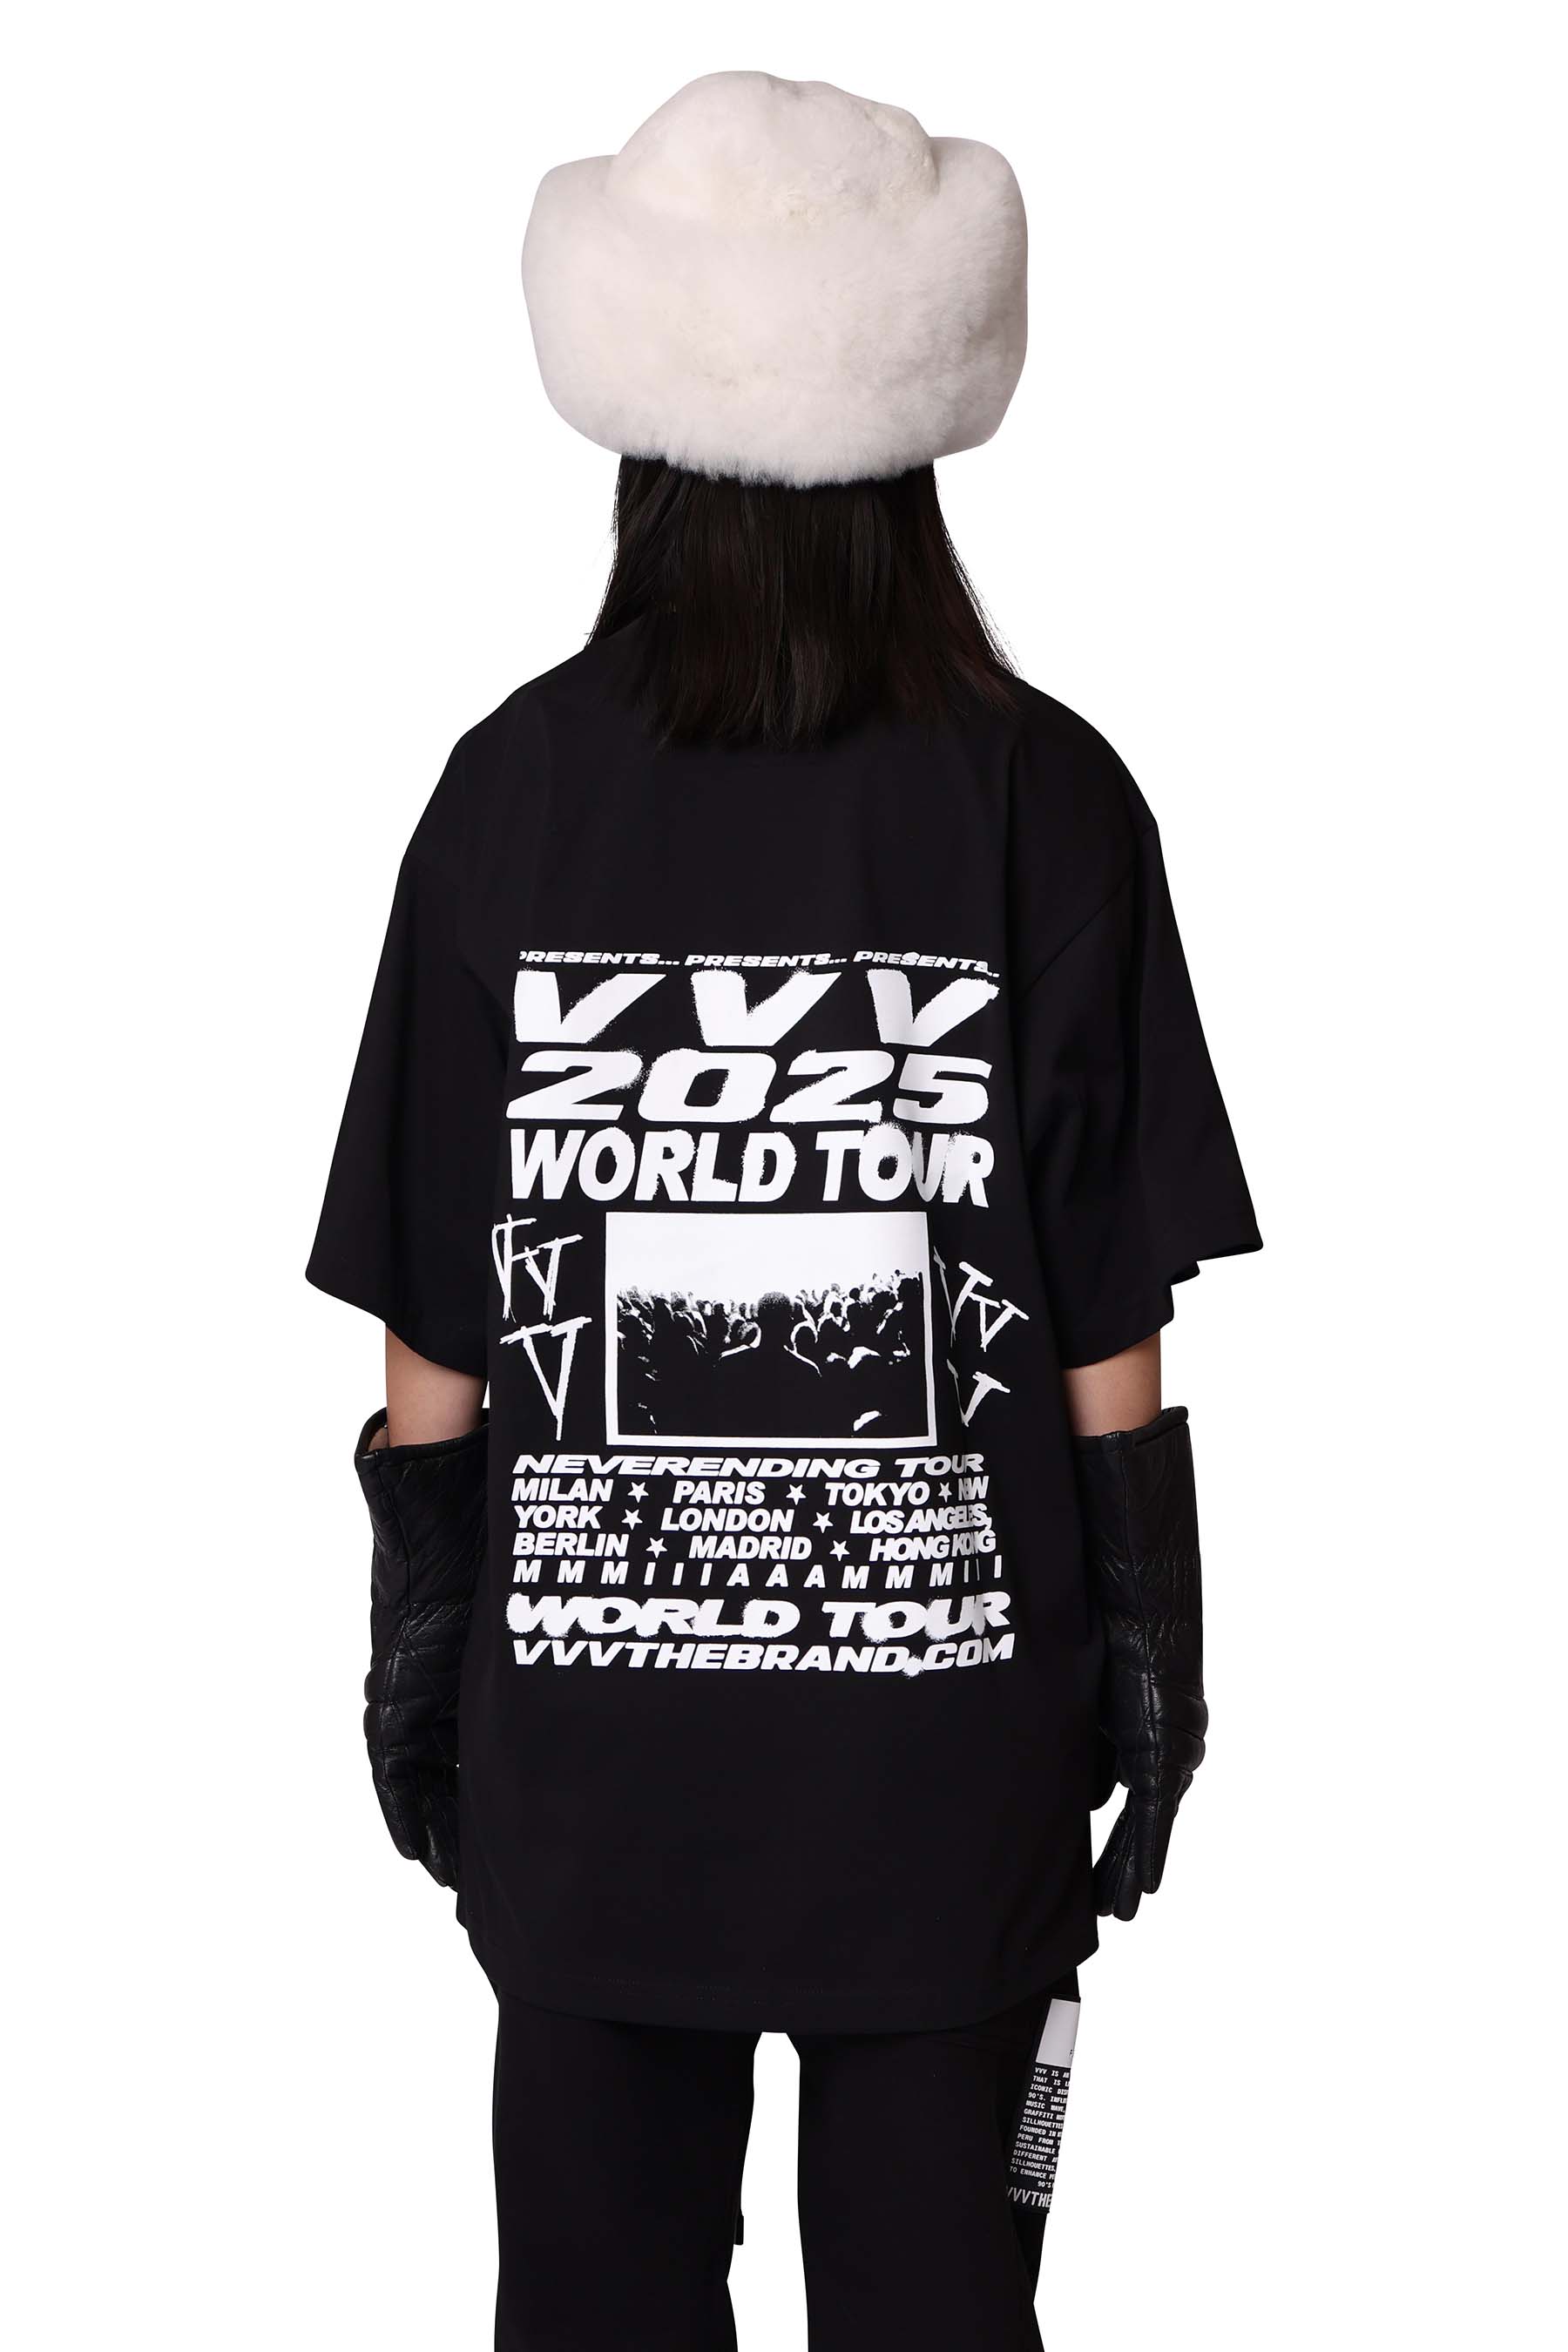 World Tour TEE - Black - VVV THE BRAND